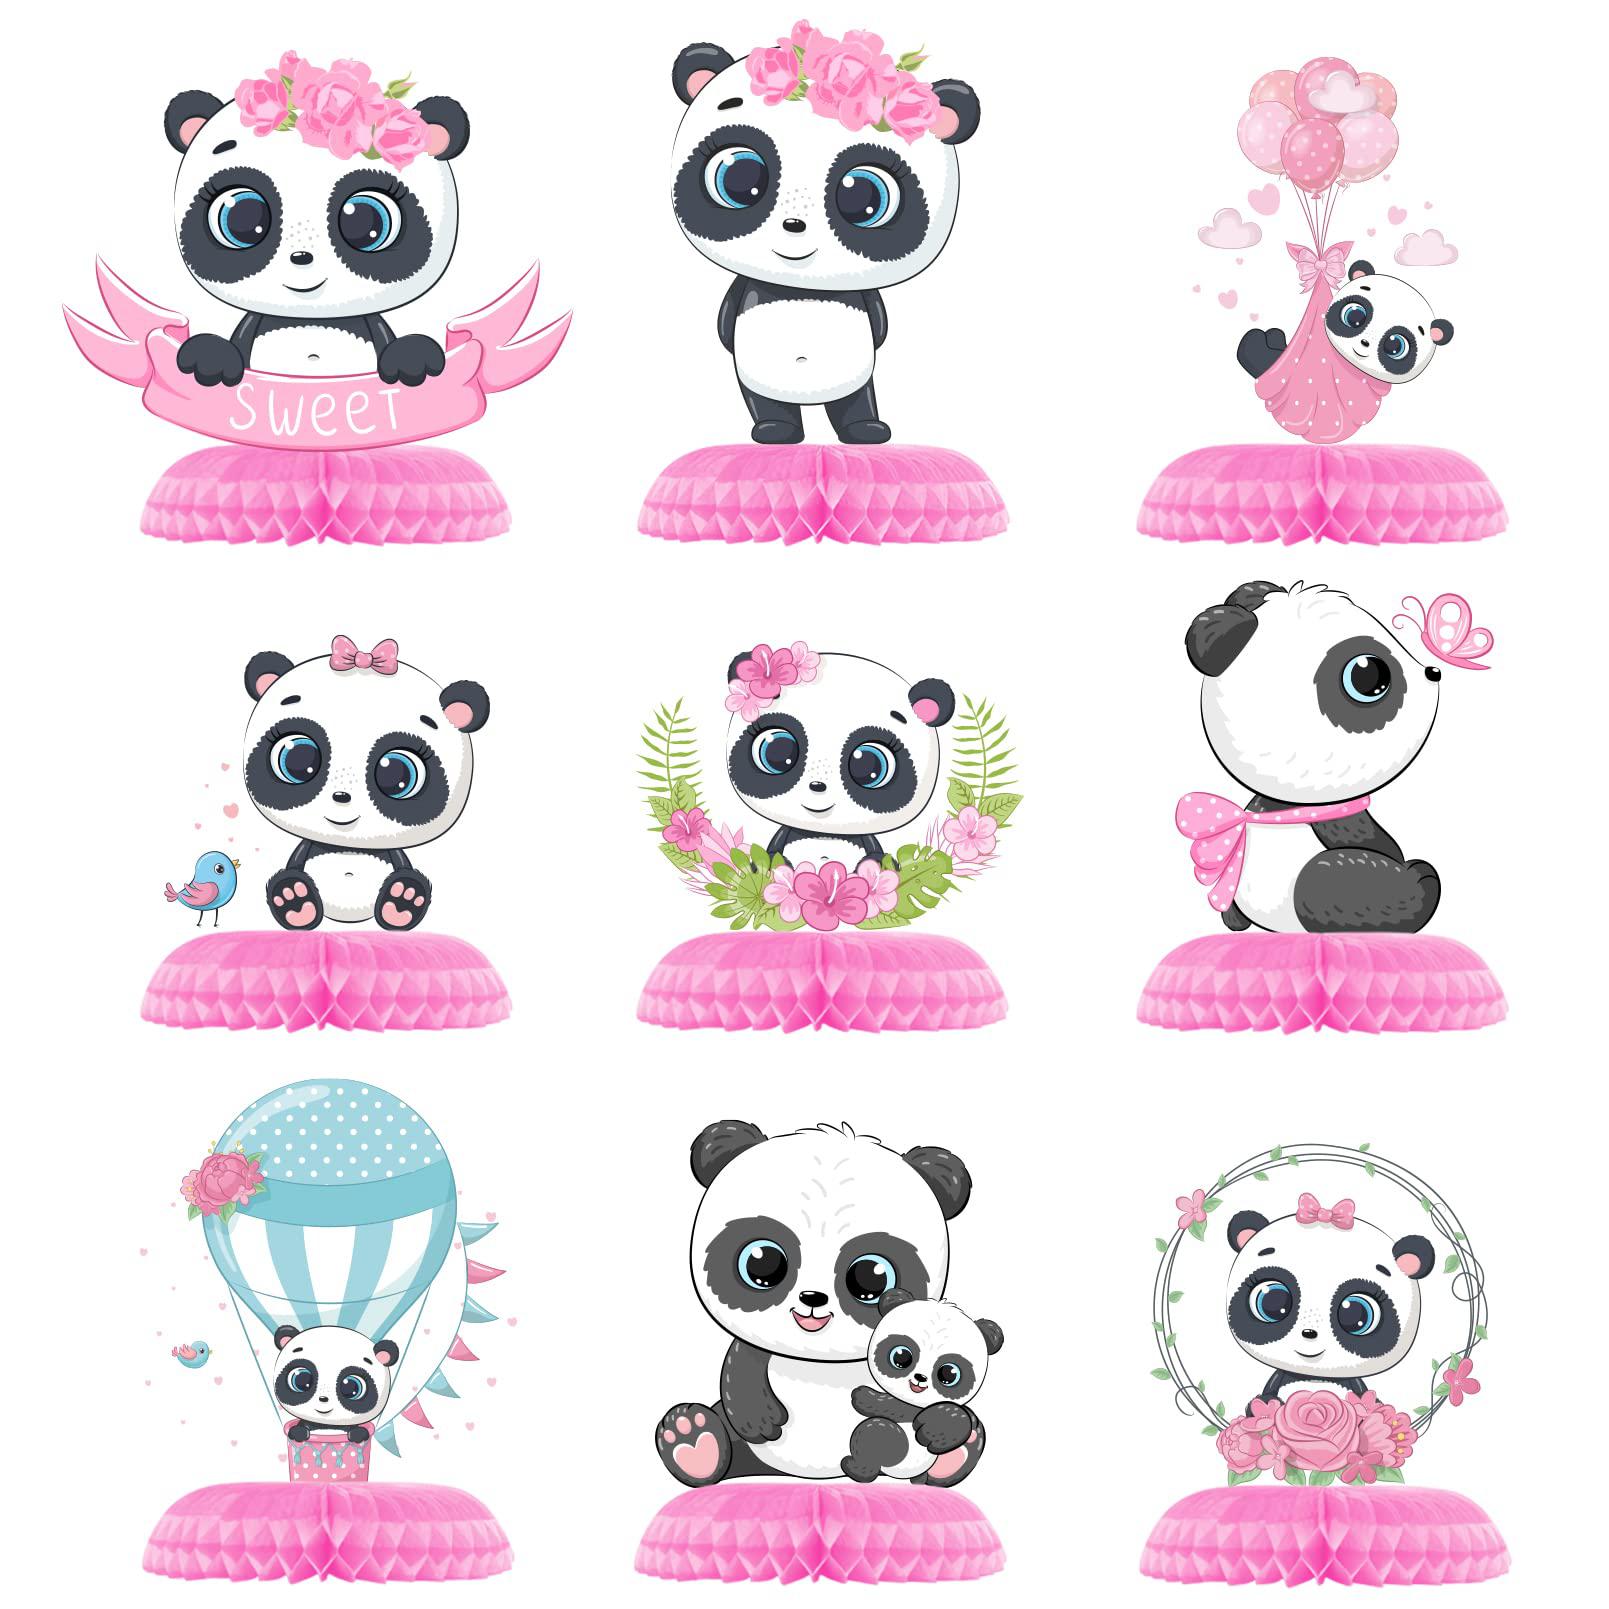 ecam [9 pack] panda party decorations, lovely panda honeycomb centerpieces, panda birthday party supplies, panda table decora